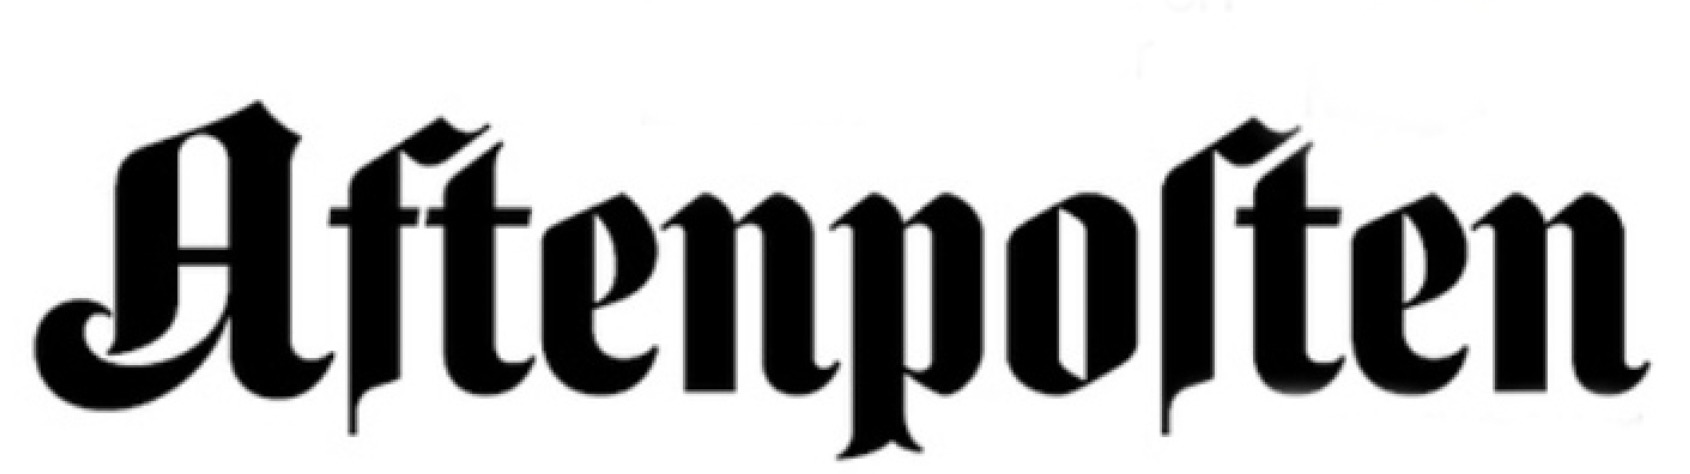 Newspaper title font